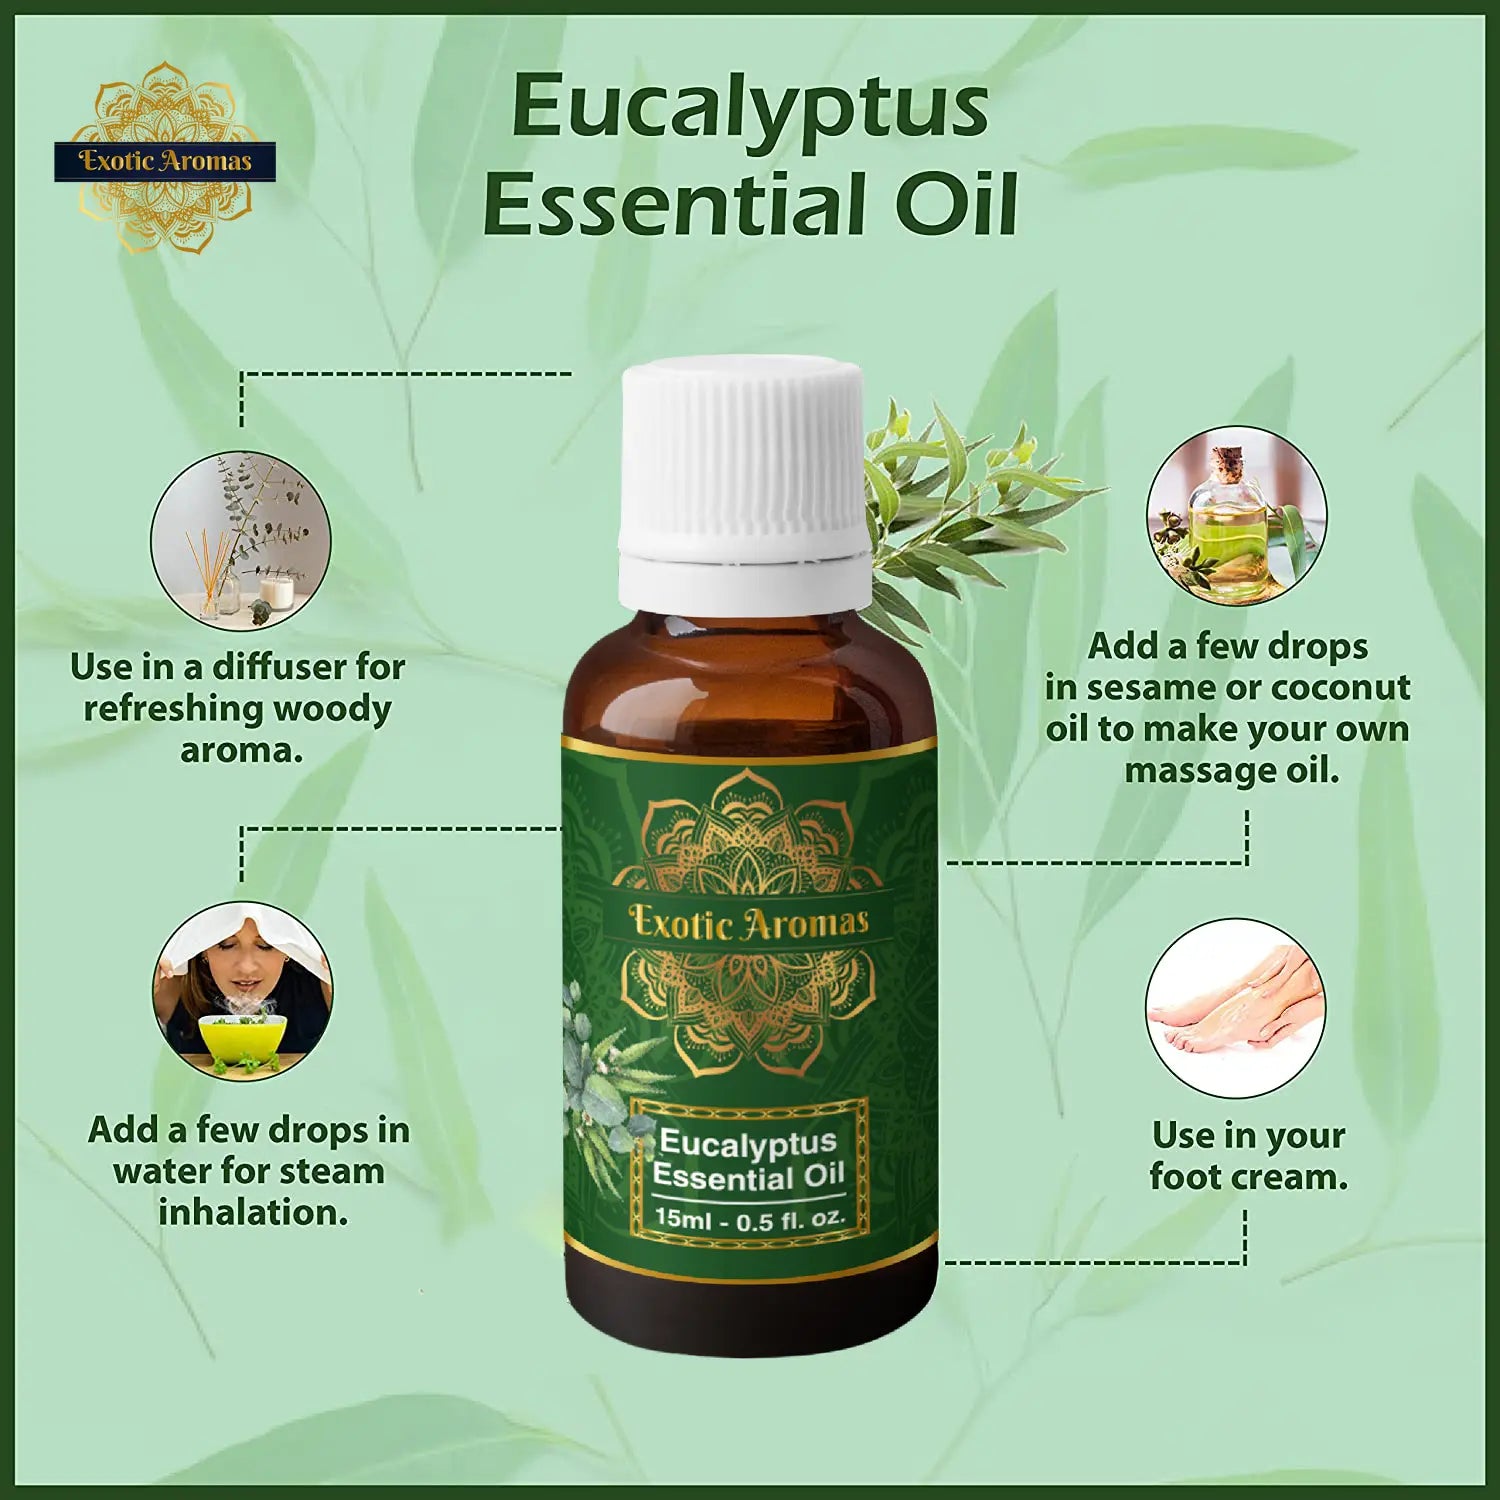 USDA Certified Organic Eucalyptus Oil